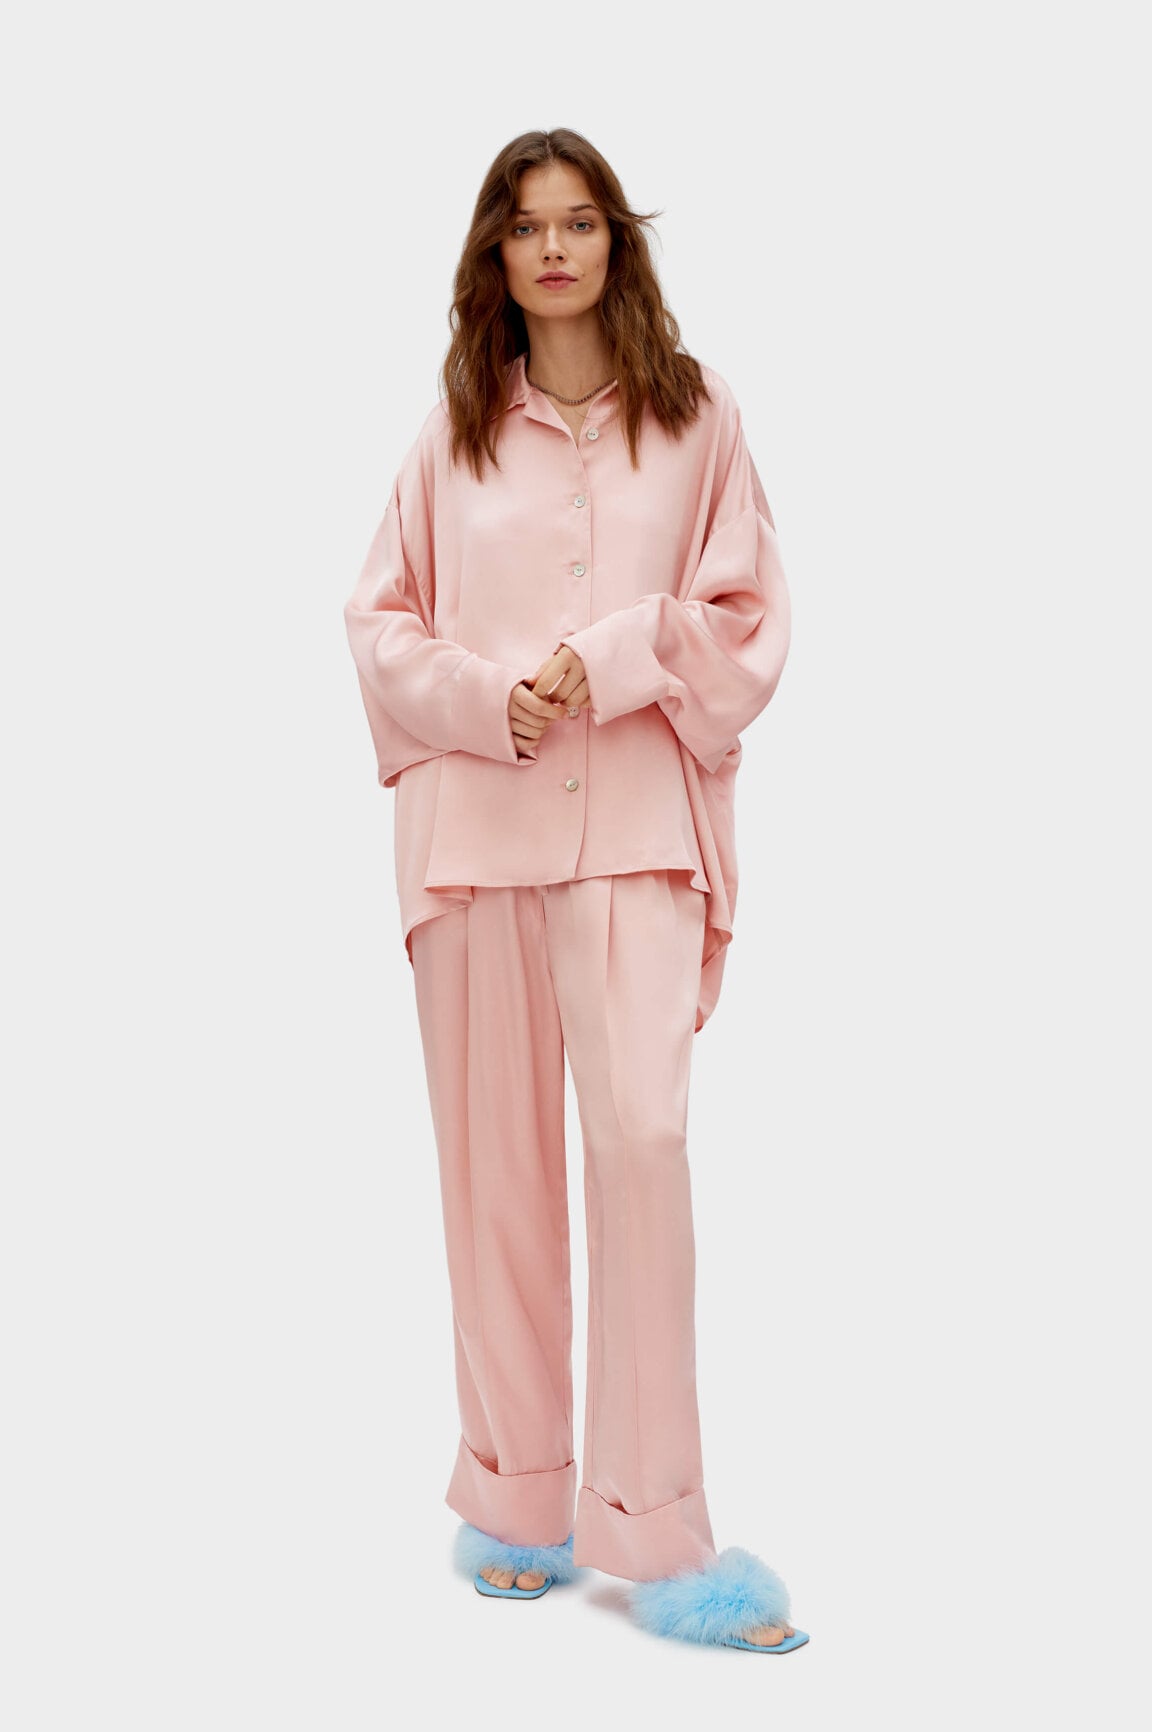 Selena Gomez and Nicola Peltz Wear Pink Silk Ruffle Trim PJs